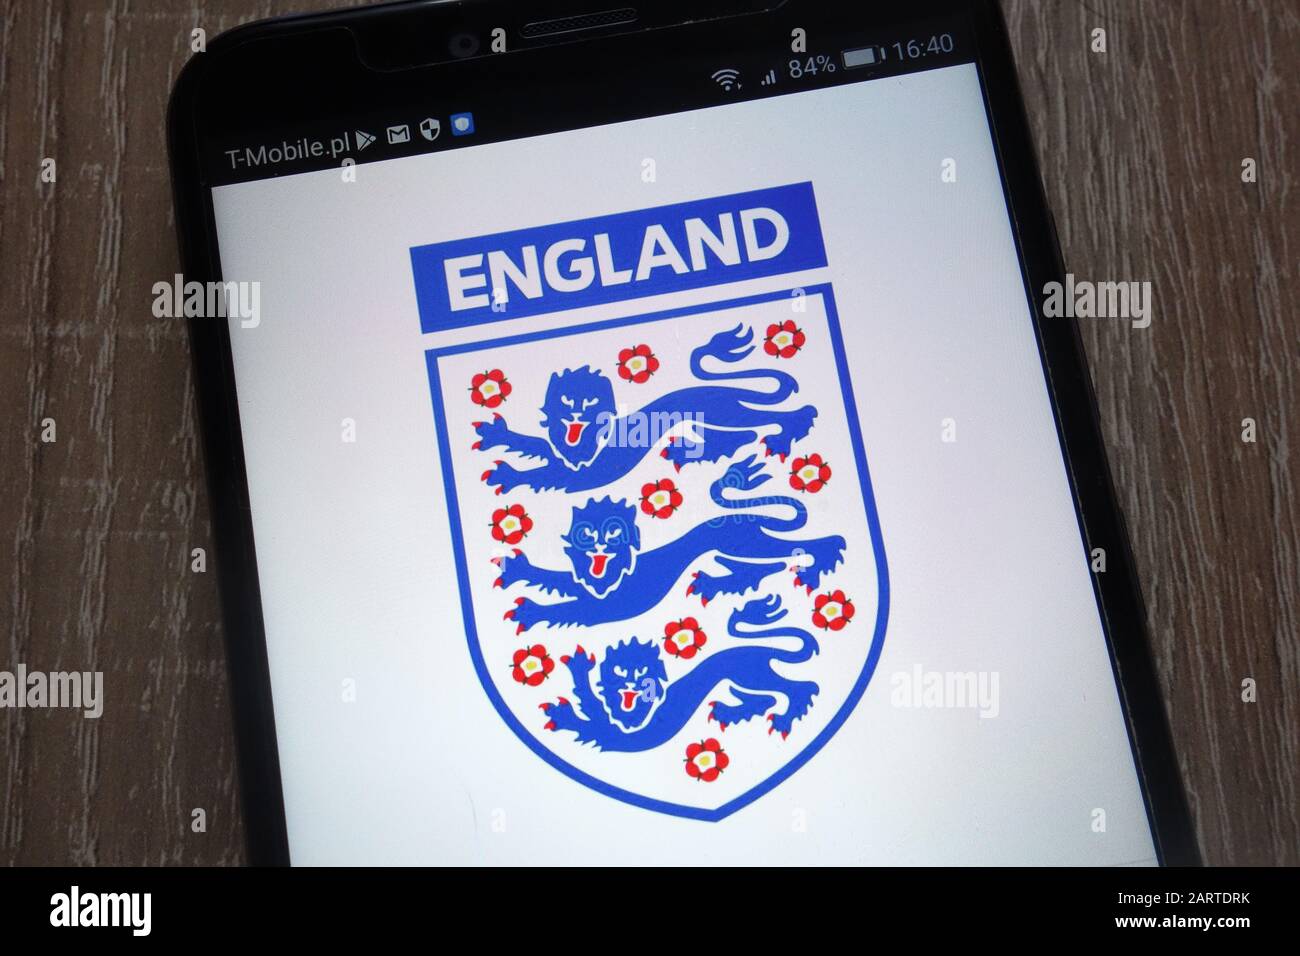 England national football team logo displayed on a modern smartphone Stock Photo